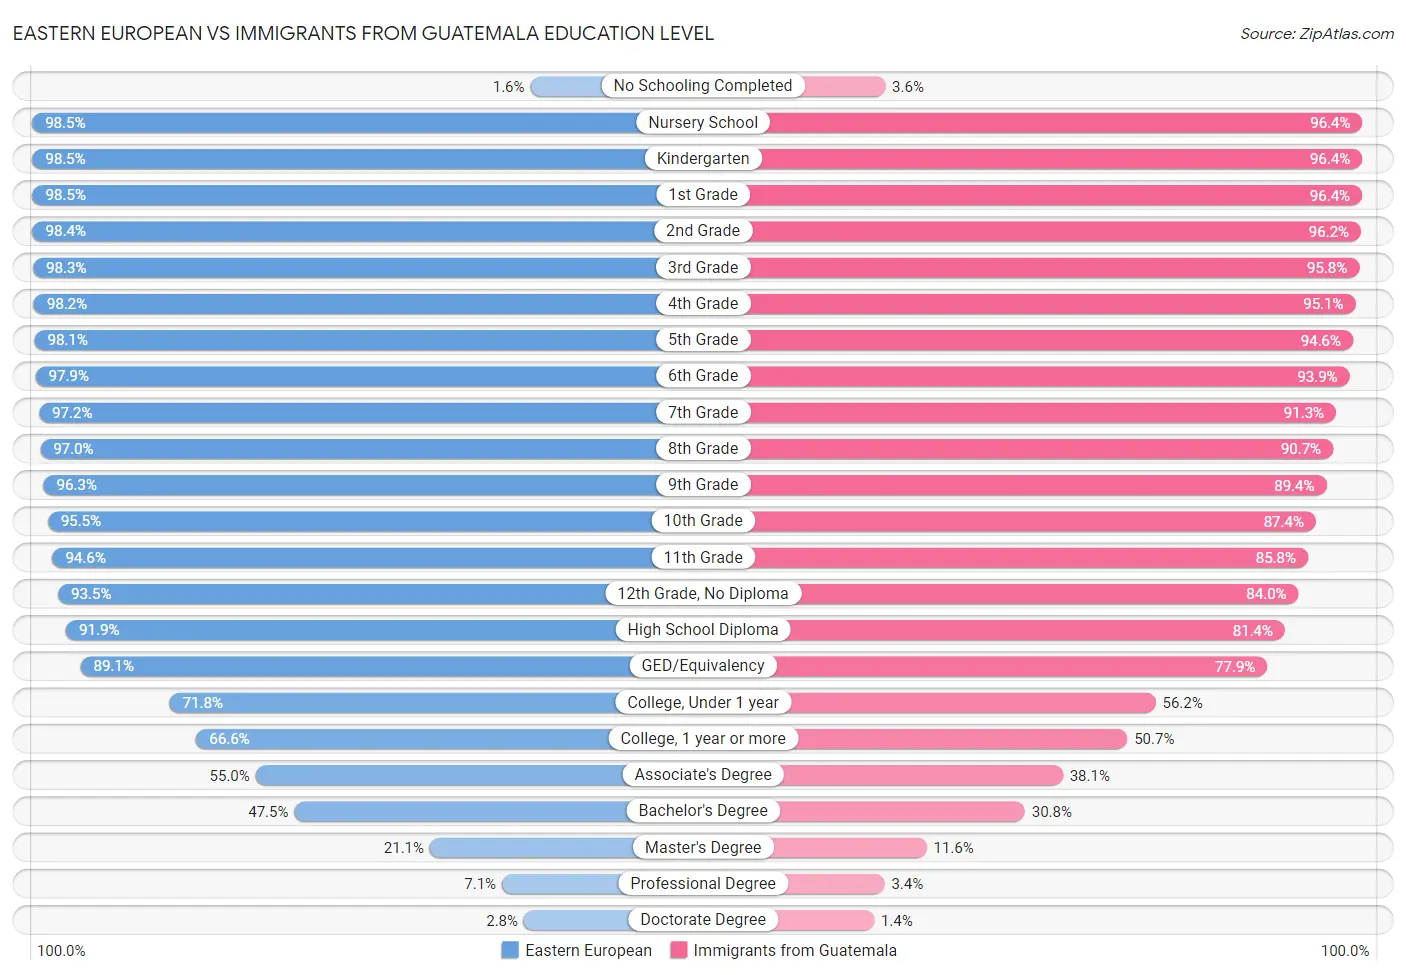 Eastern European vs Immigrants from Guatemala Education Level